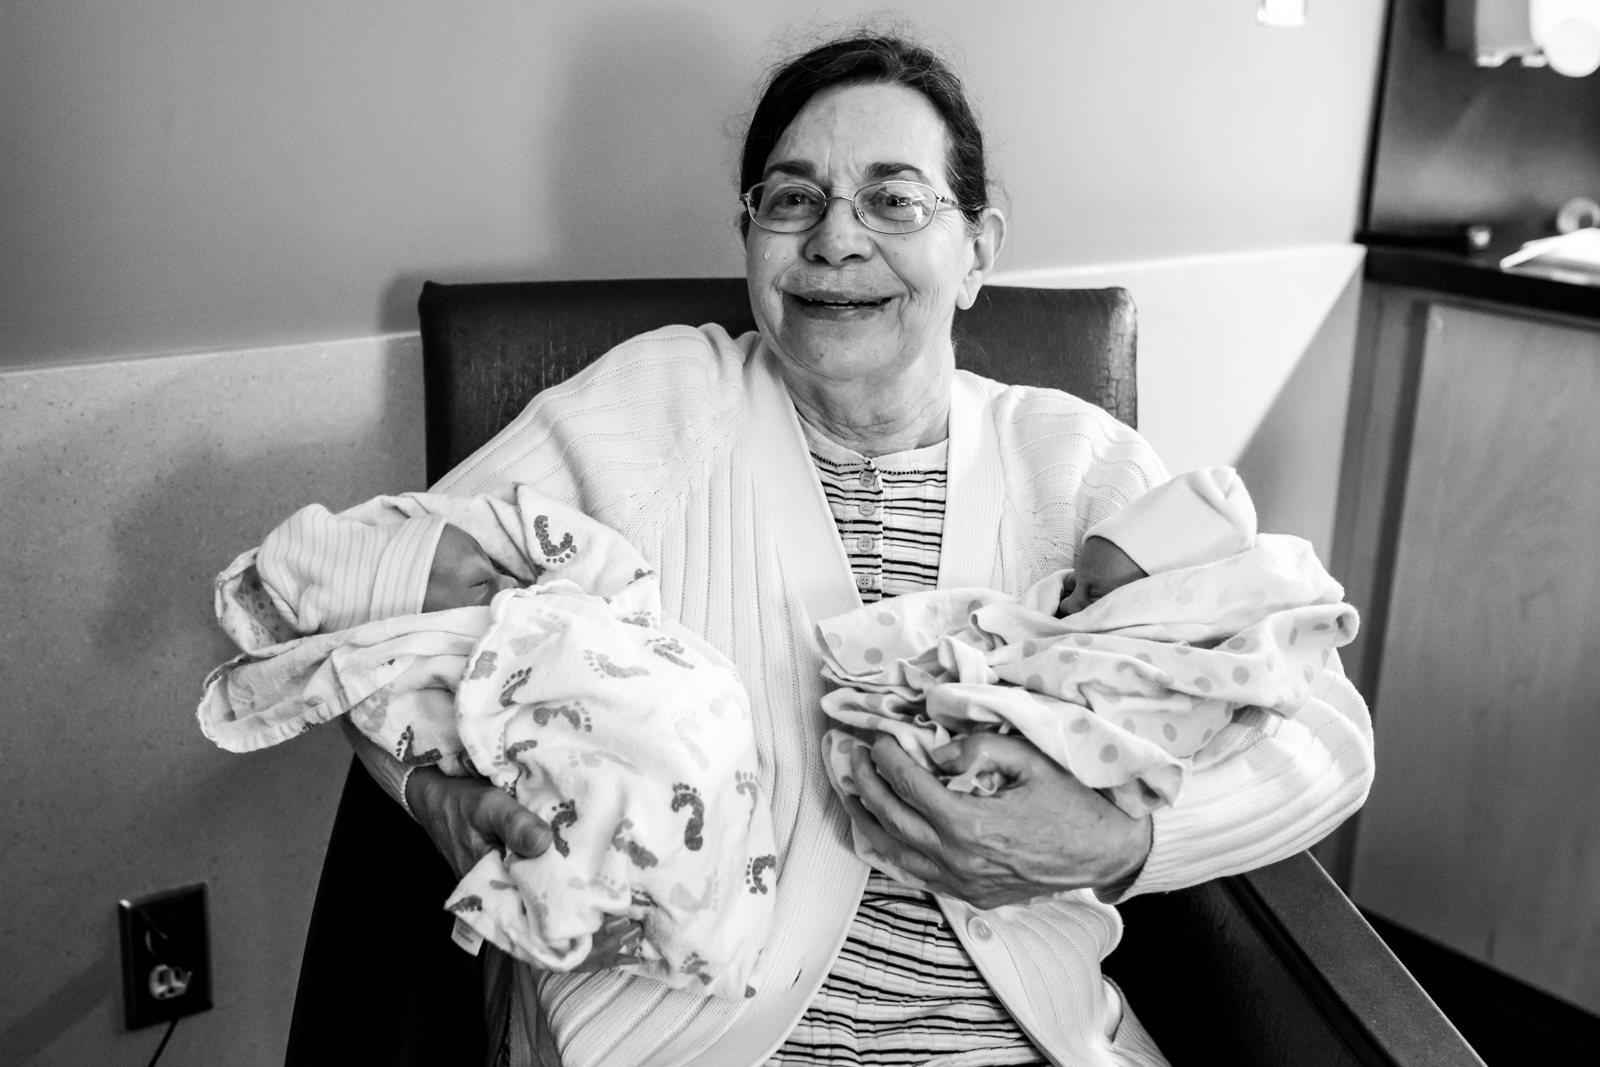 grandma holds her twin grand babies